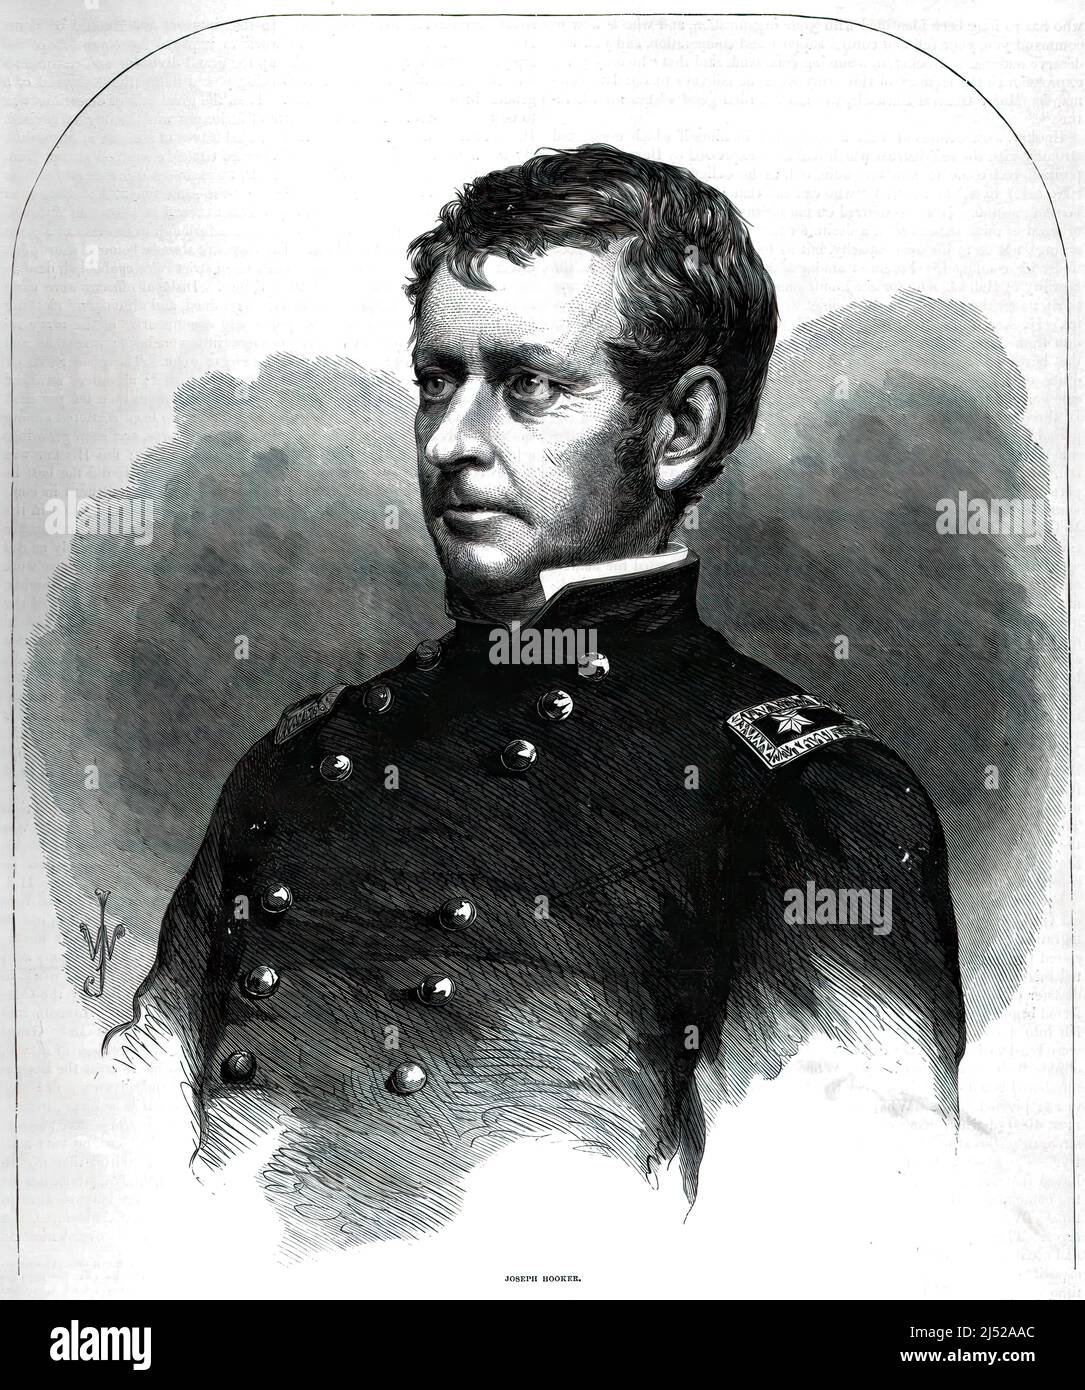 Joseph Hooker, Union Army General in the American Civil War. 19th century illustration. Stock Photo